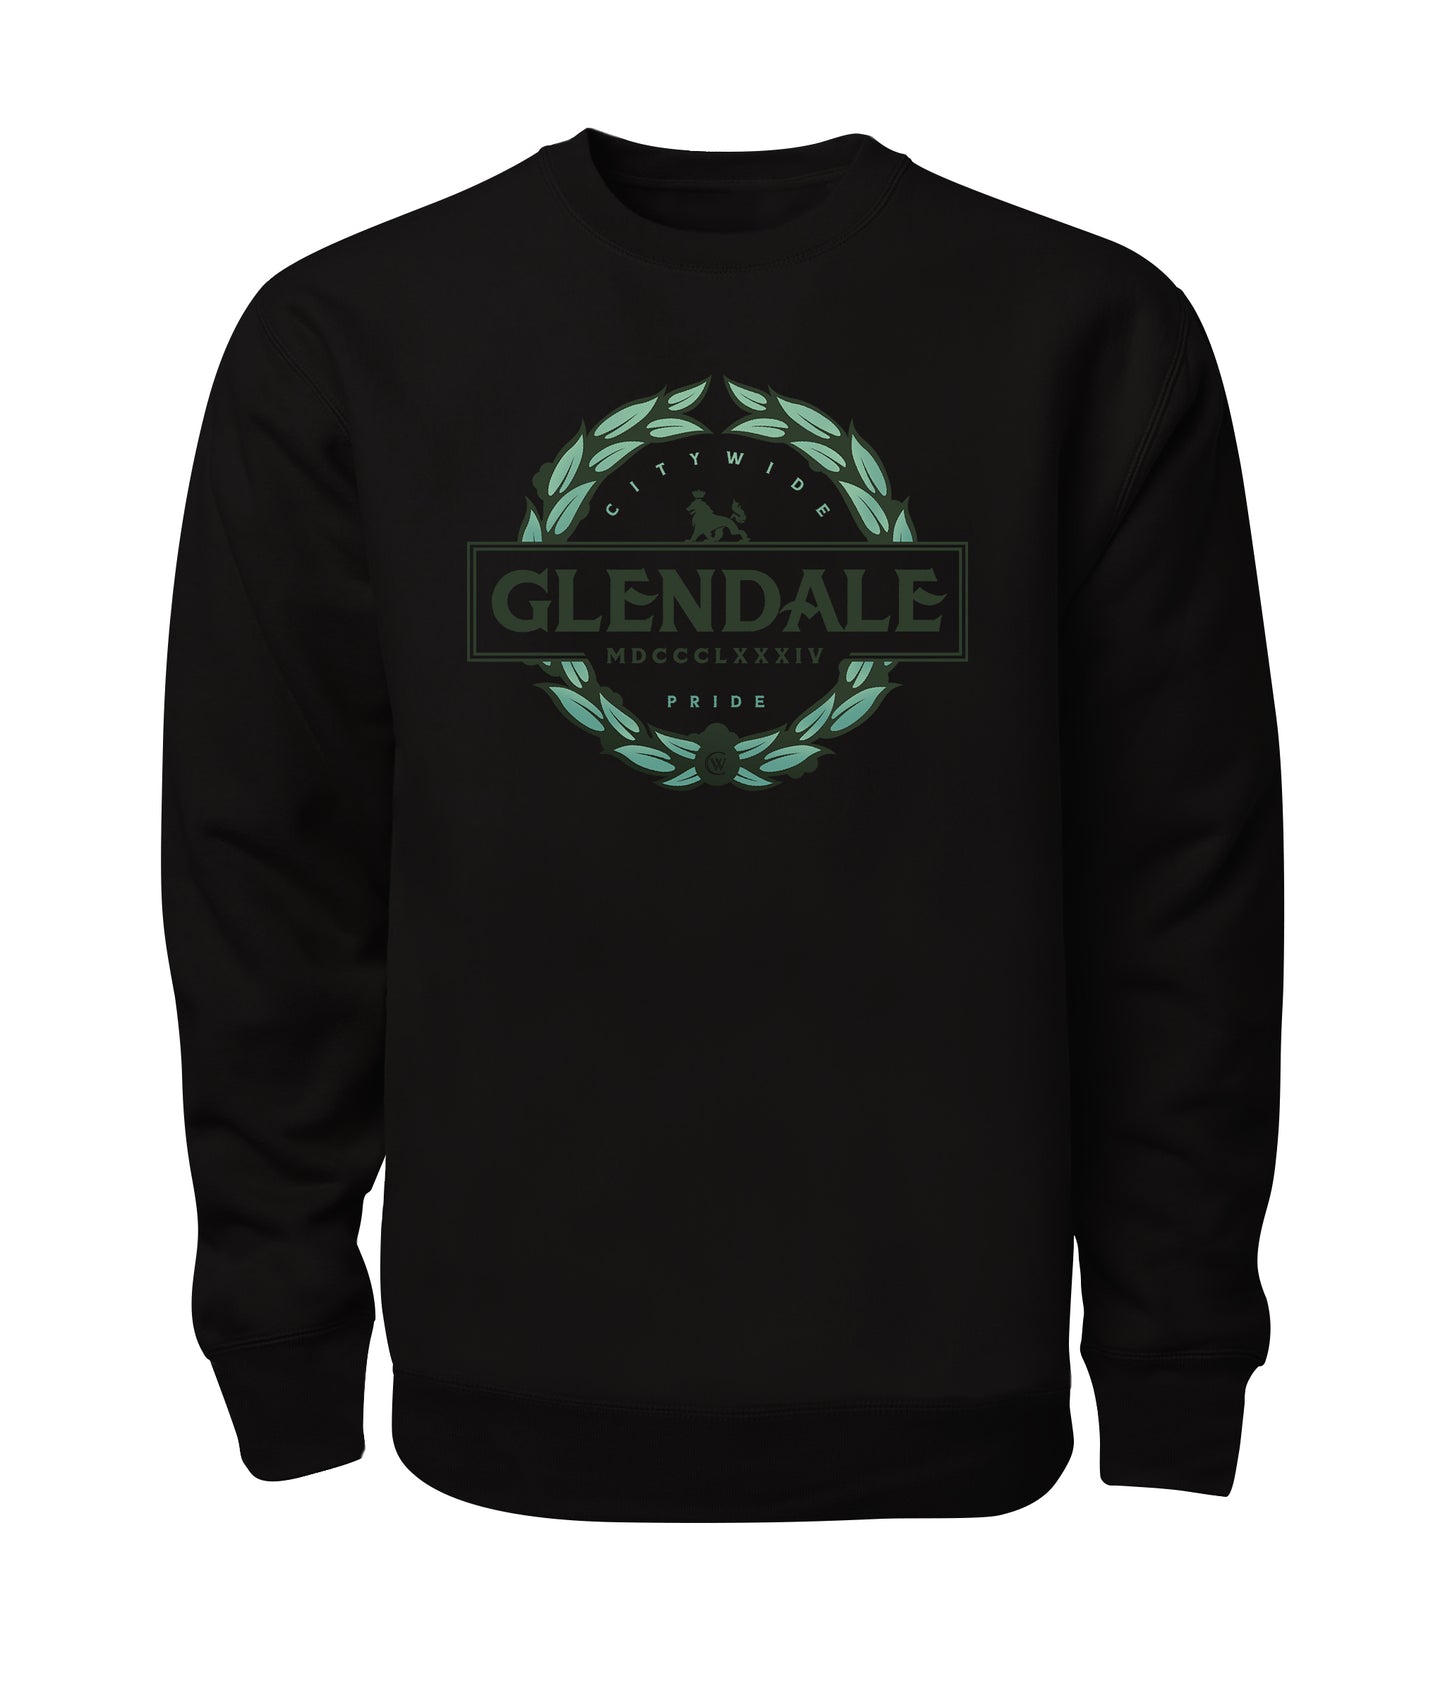 Glendale The Pride Crewneck Sweatshirt